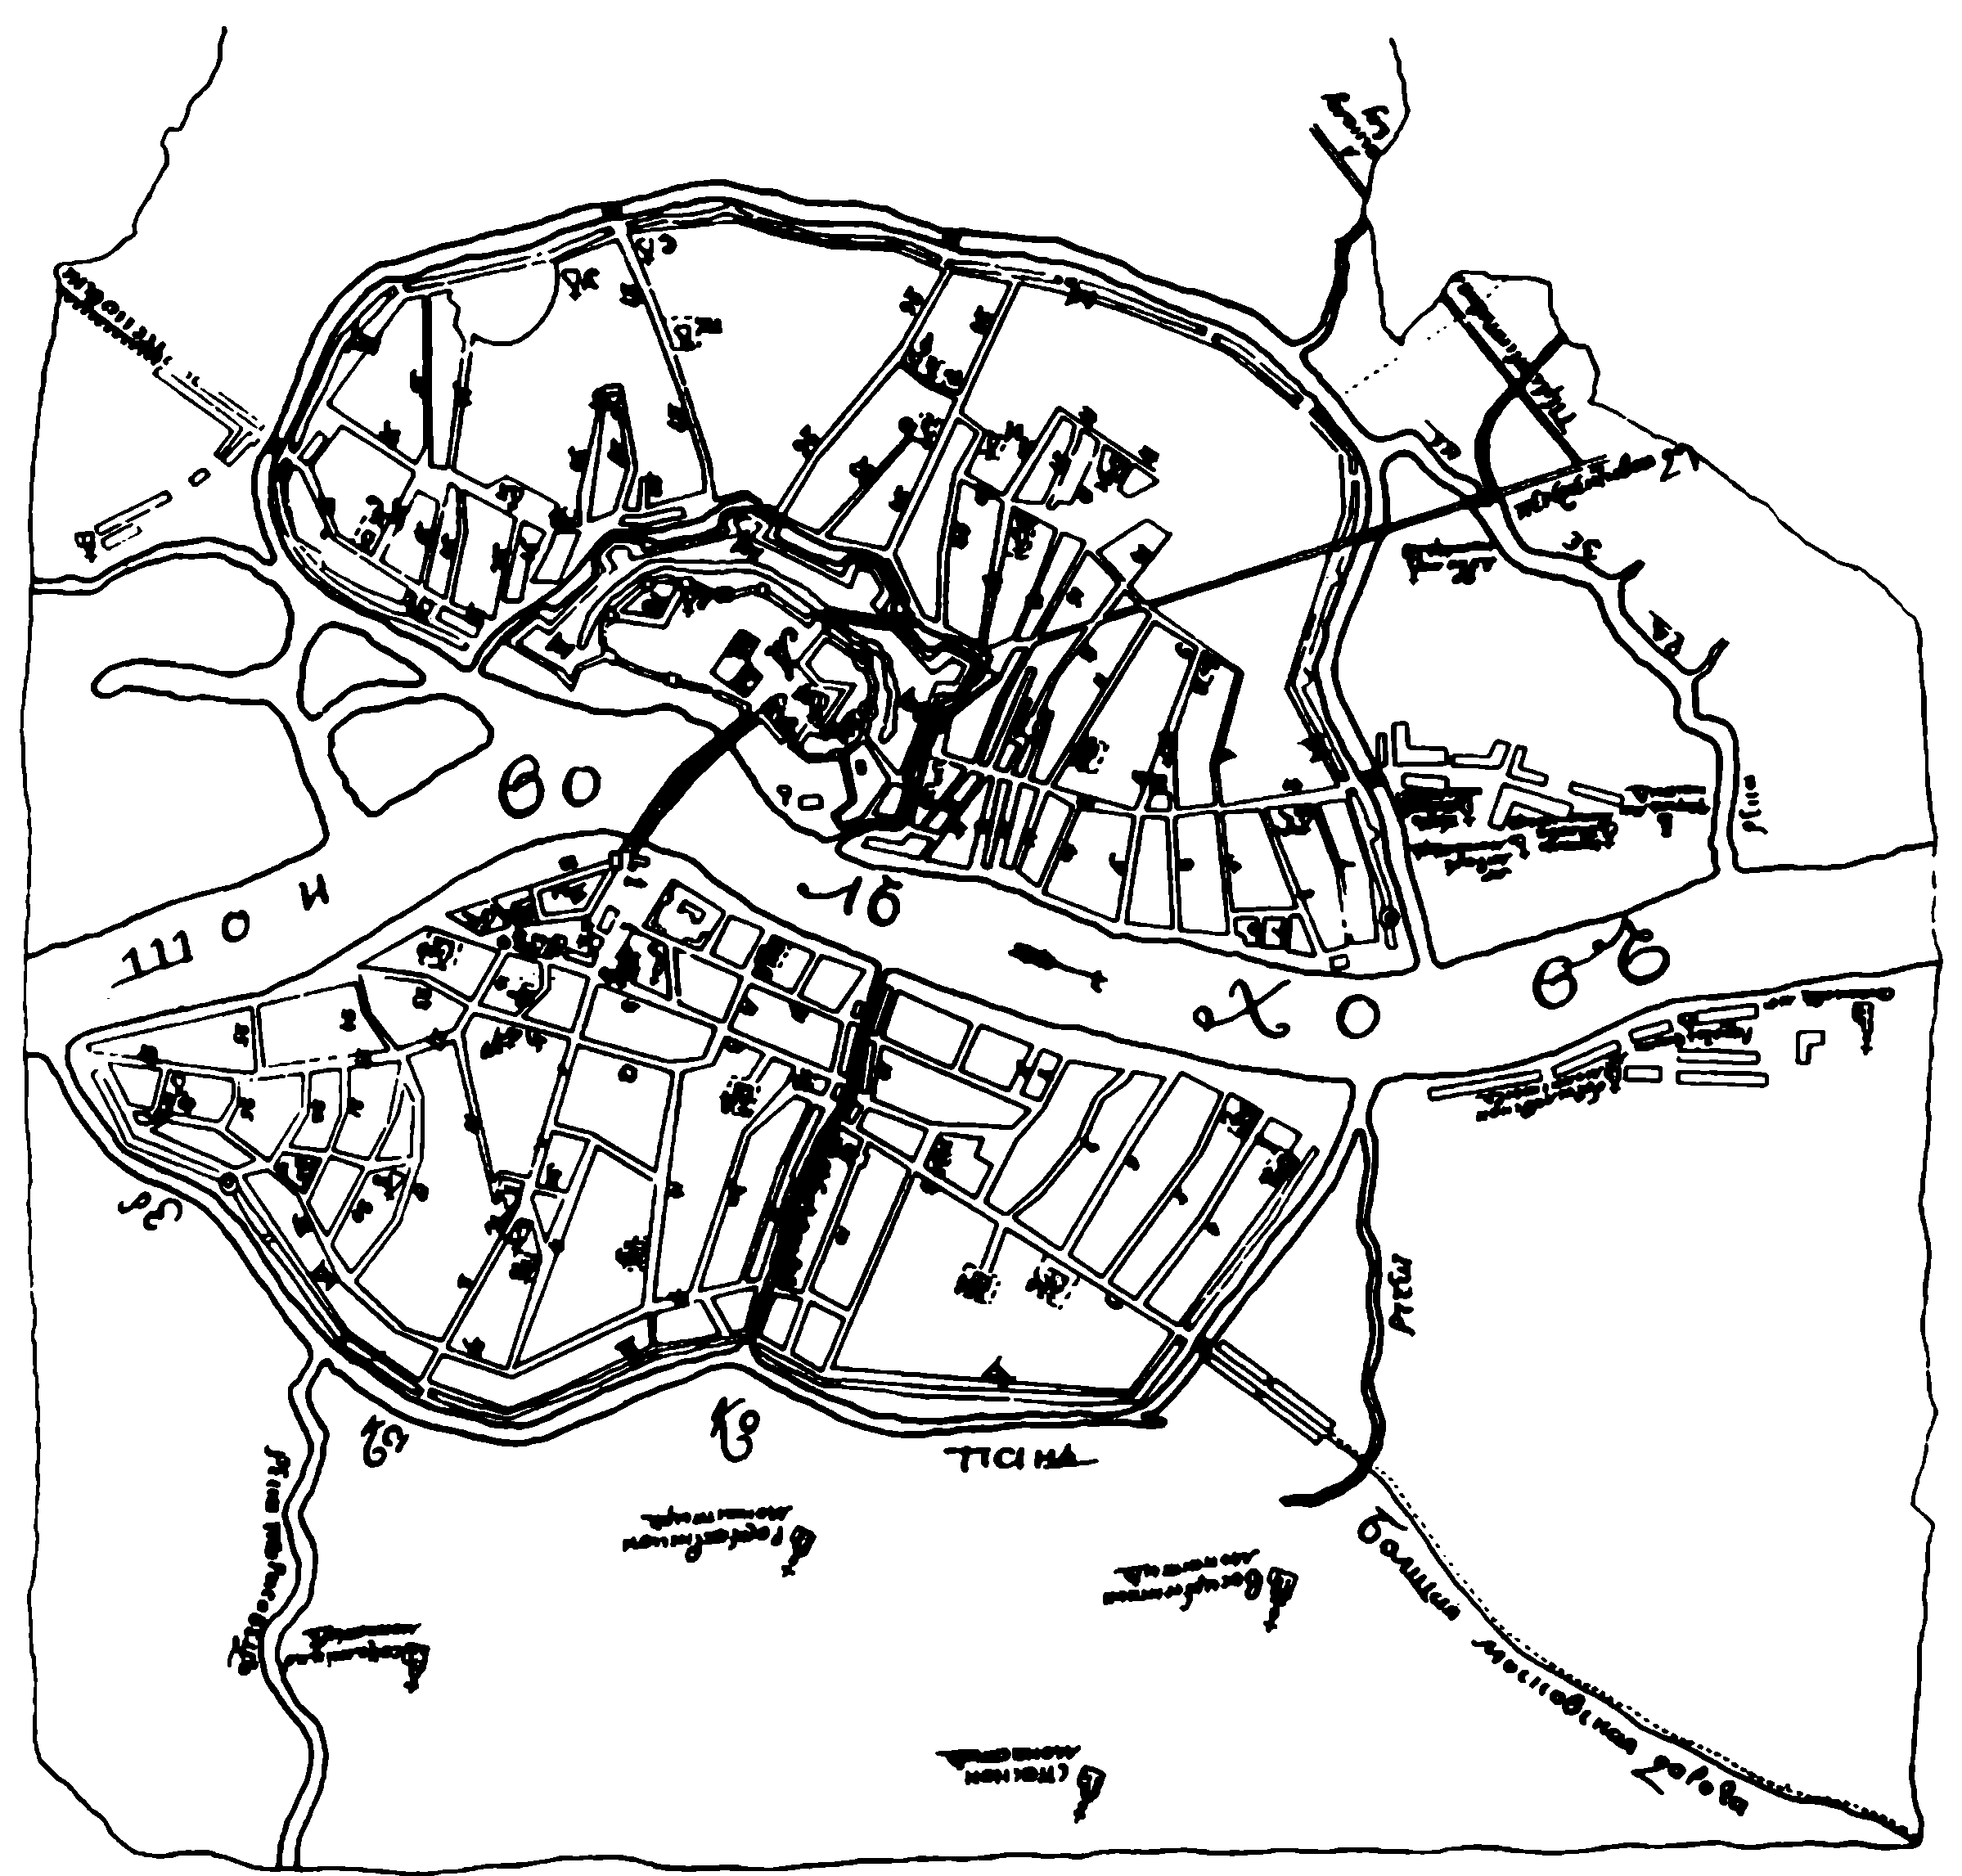 Новгород. План 1749 г